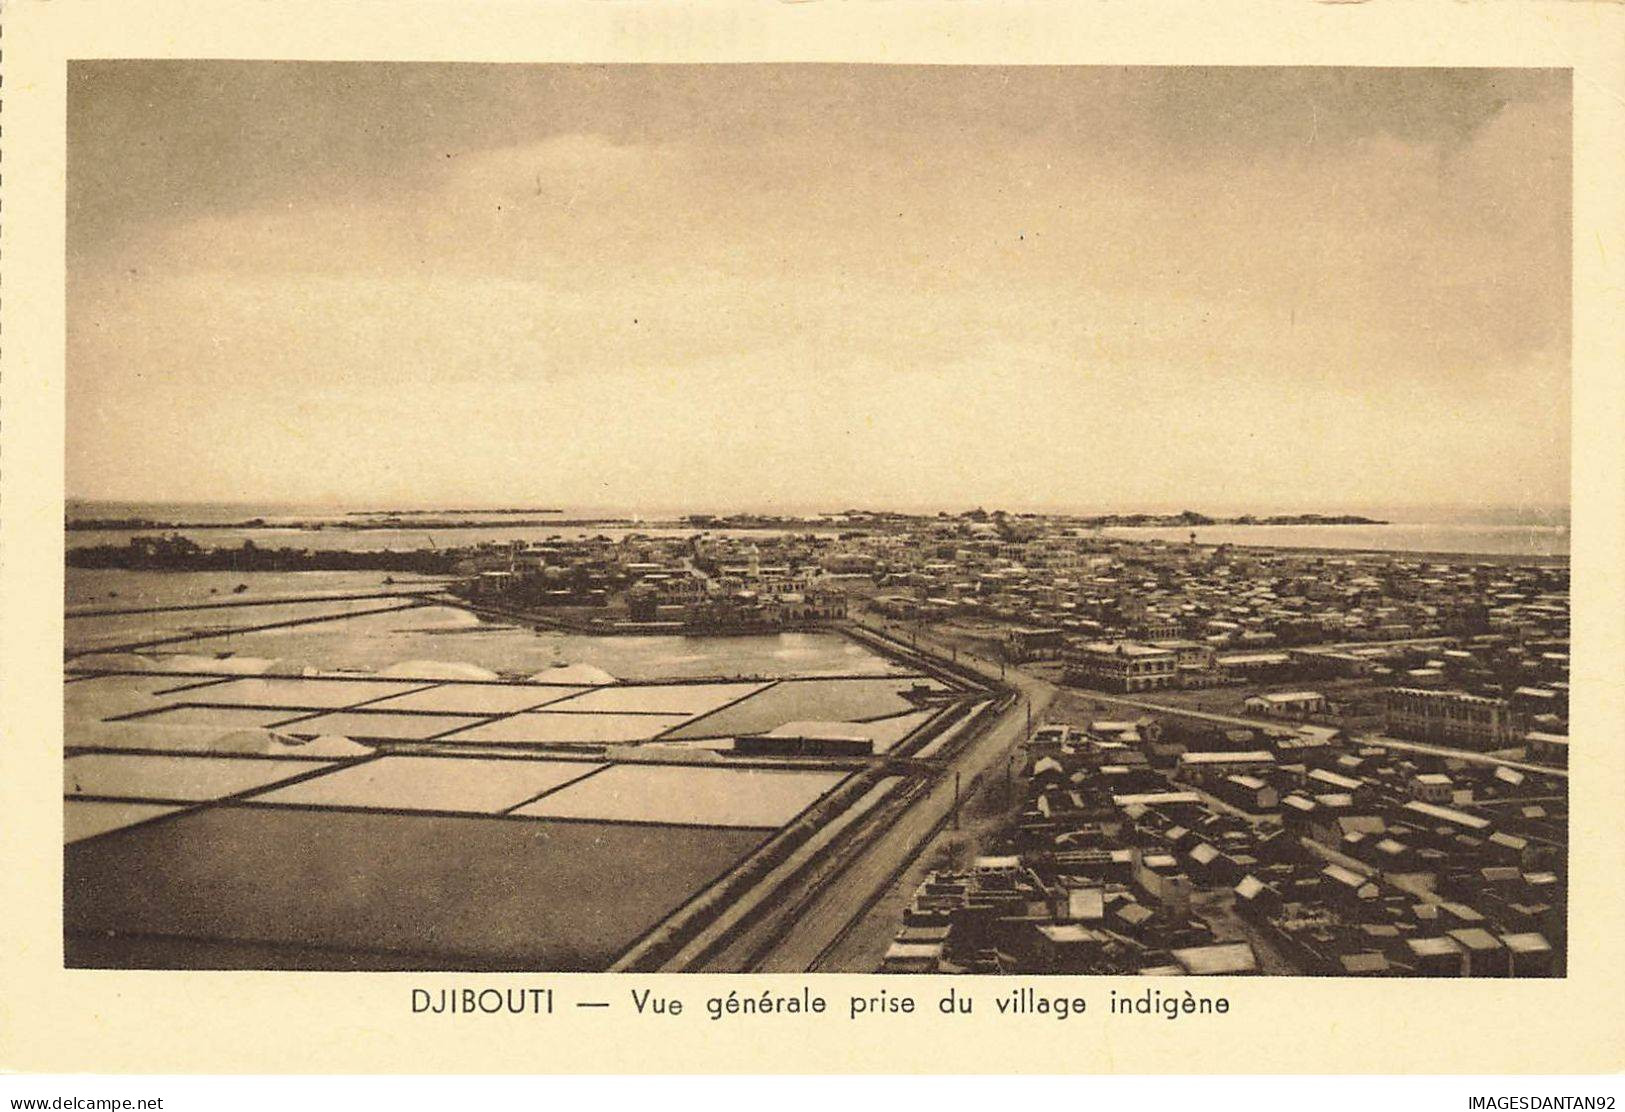 DJIBOUTI #27825 VUE GENERALE VILLAGE INDIGENE - Djibouti